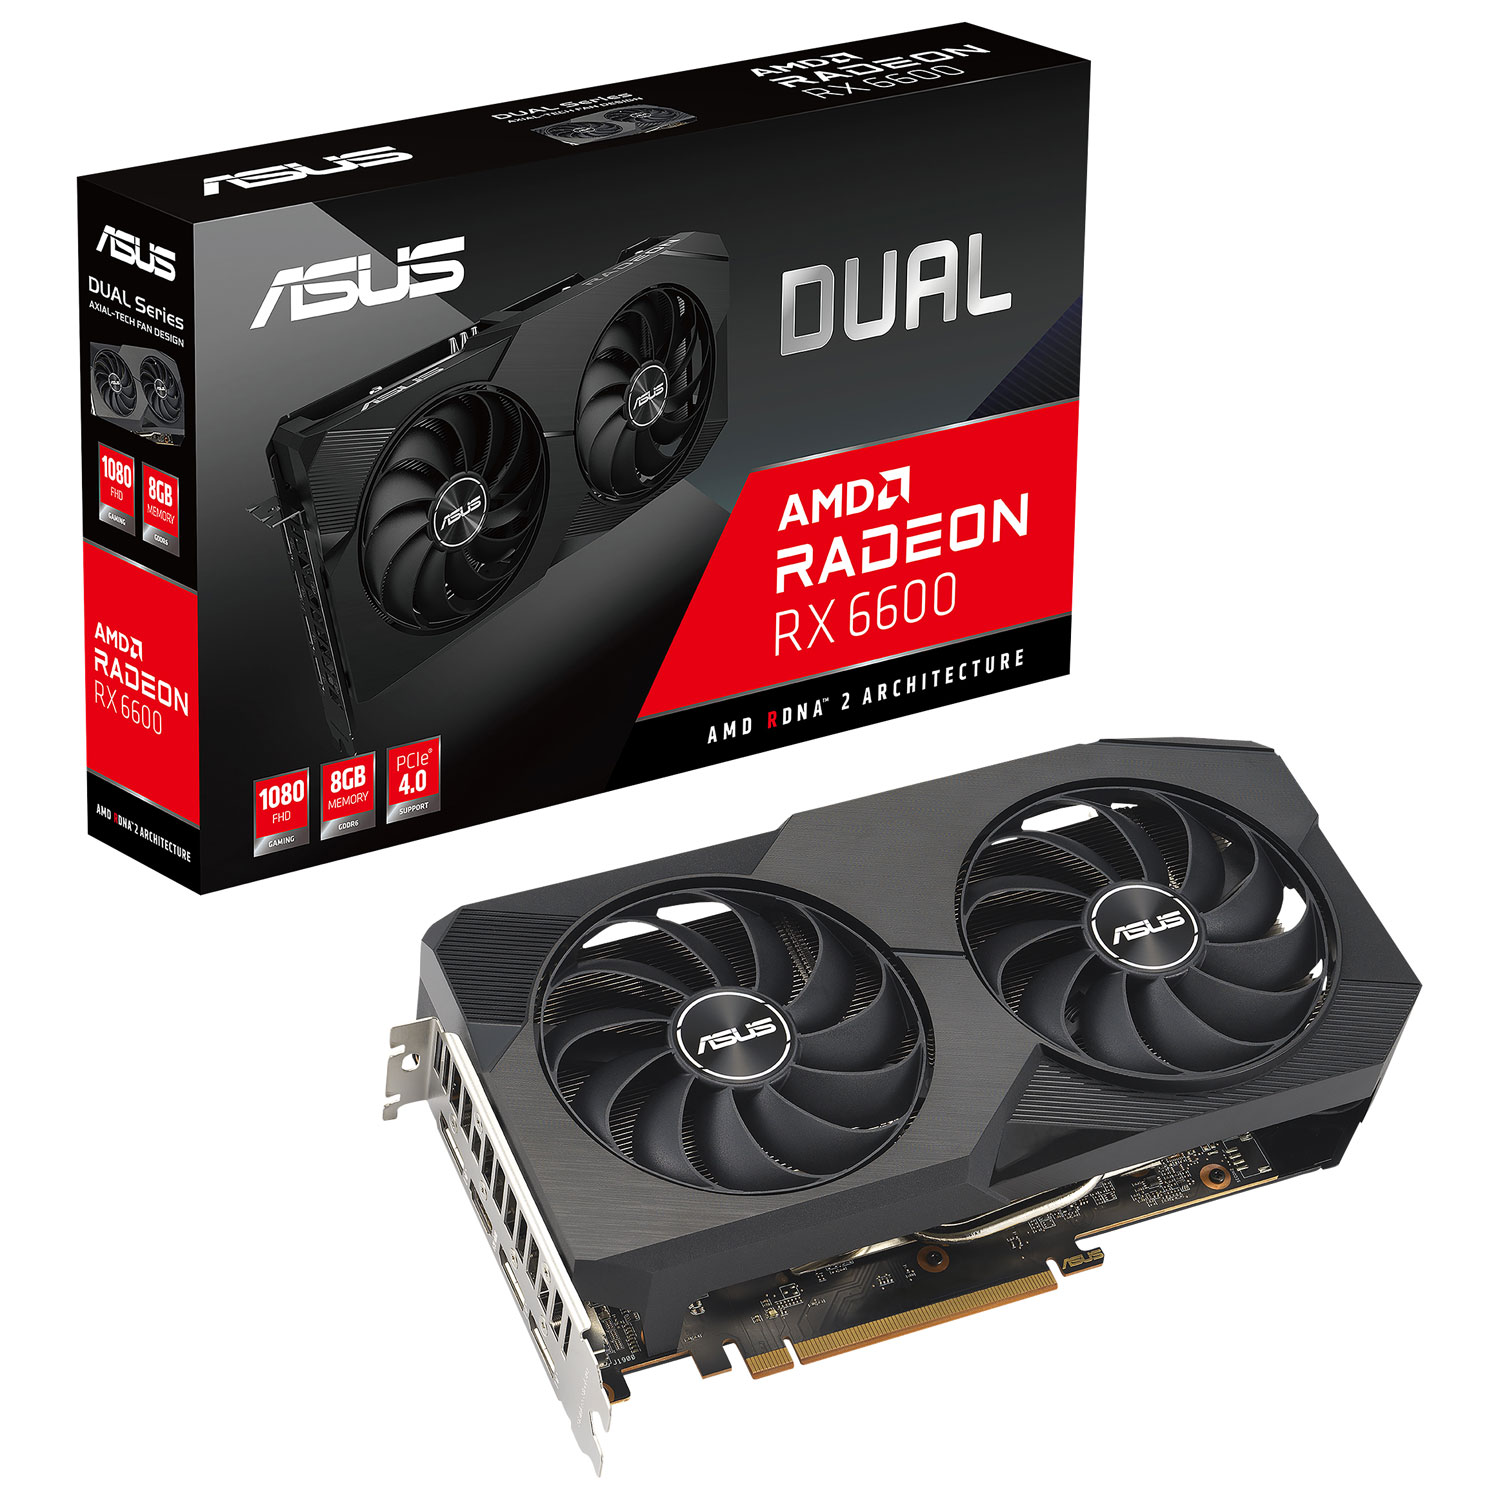 ASUS DUAL AMD Radeon RX 6600 8GB GDDR6 Video Card